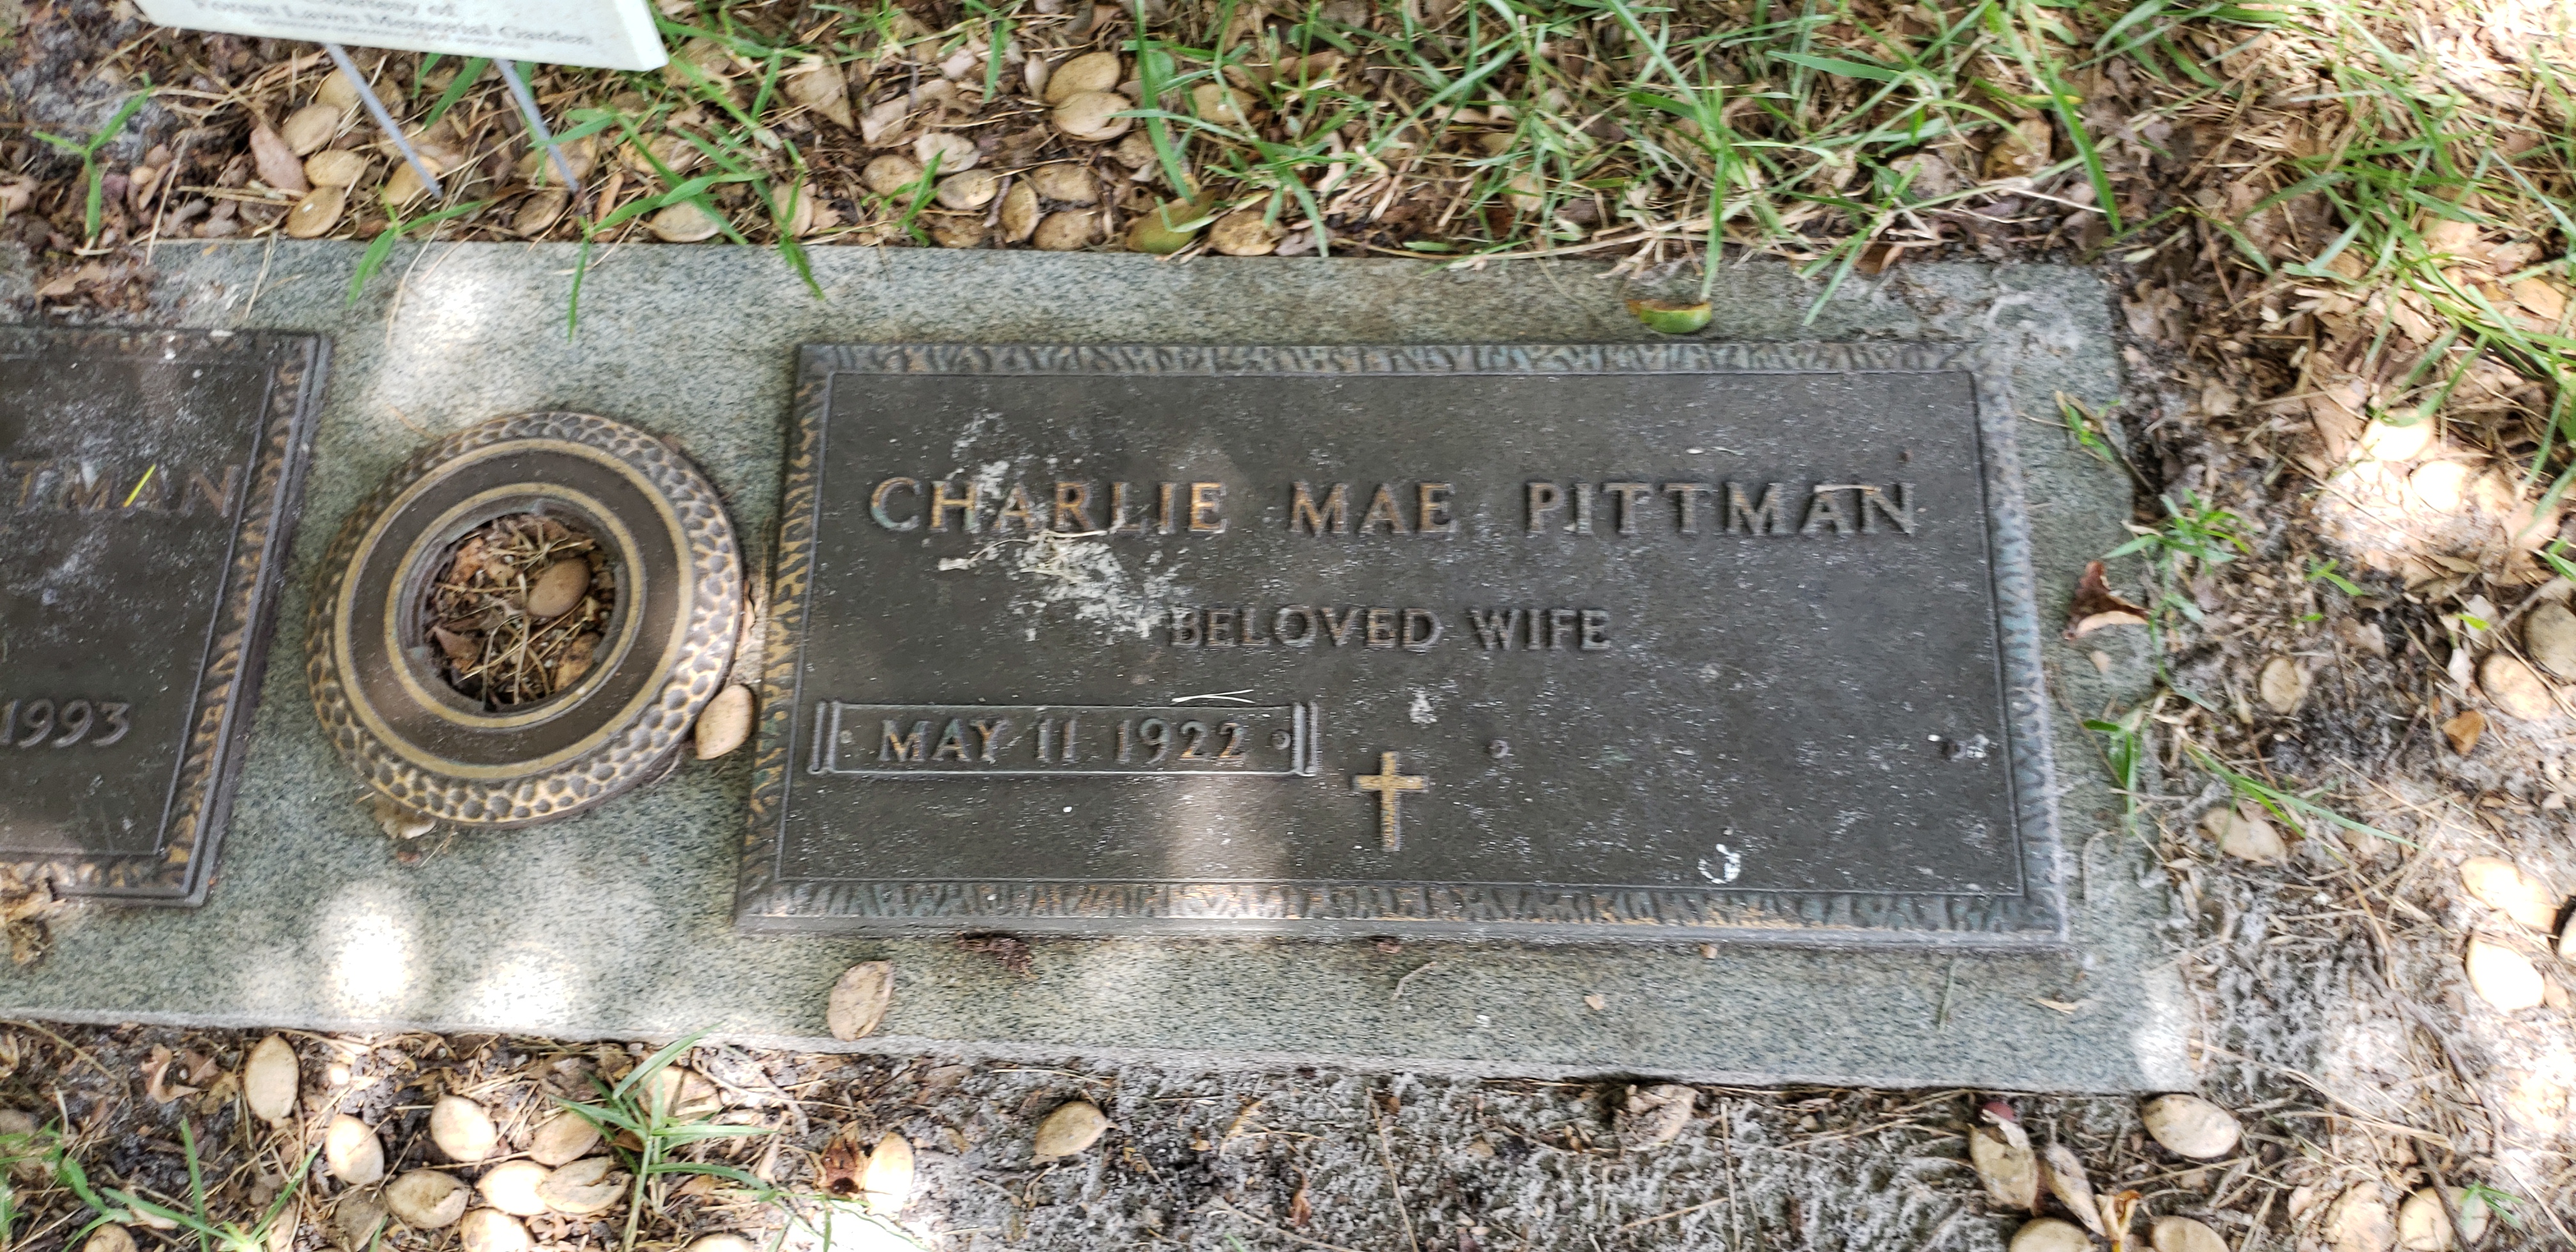 Charlie Mae Pittman